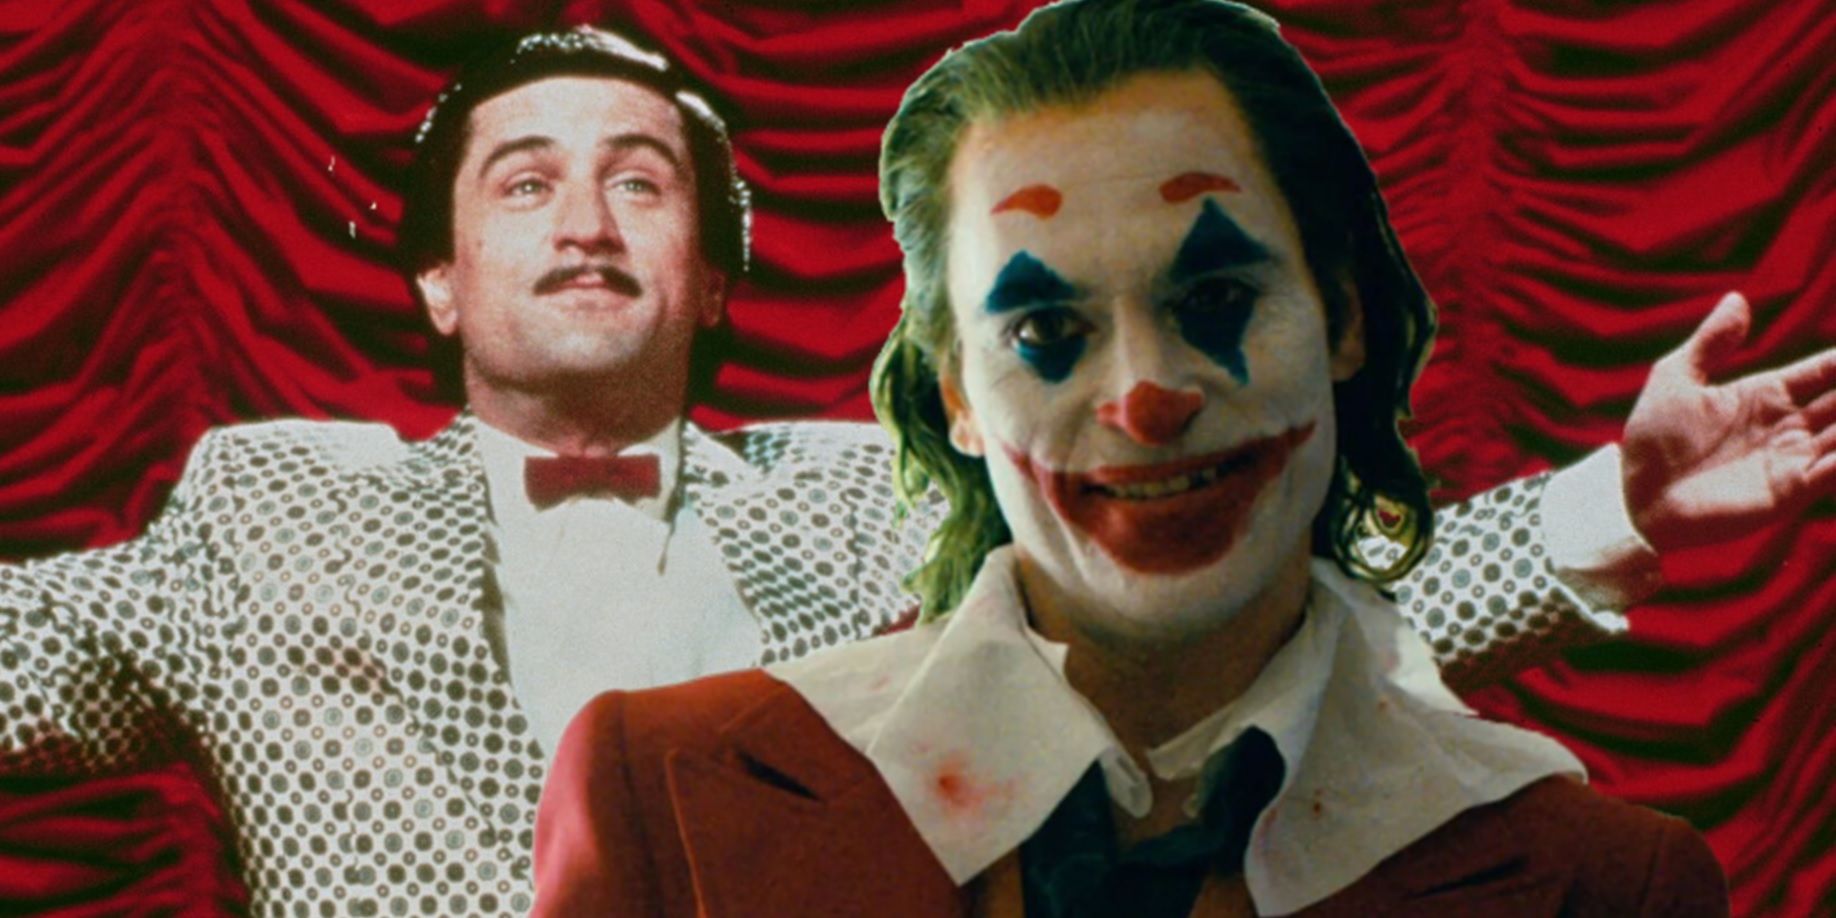 Rupert Pupkin in The King of Comedy with Arthur Fleck in Joker